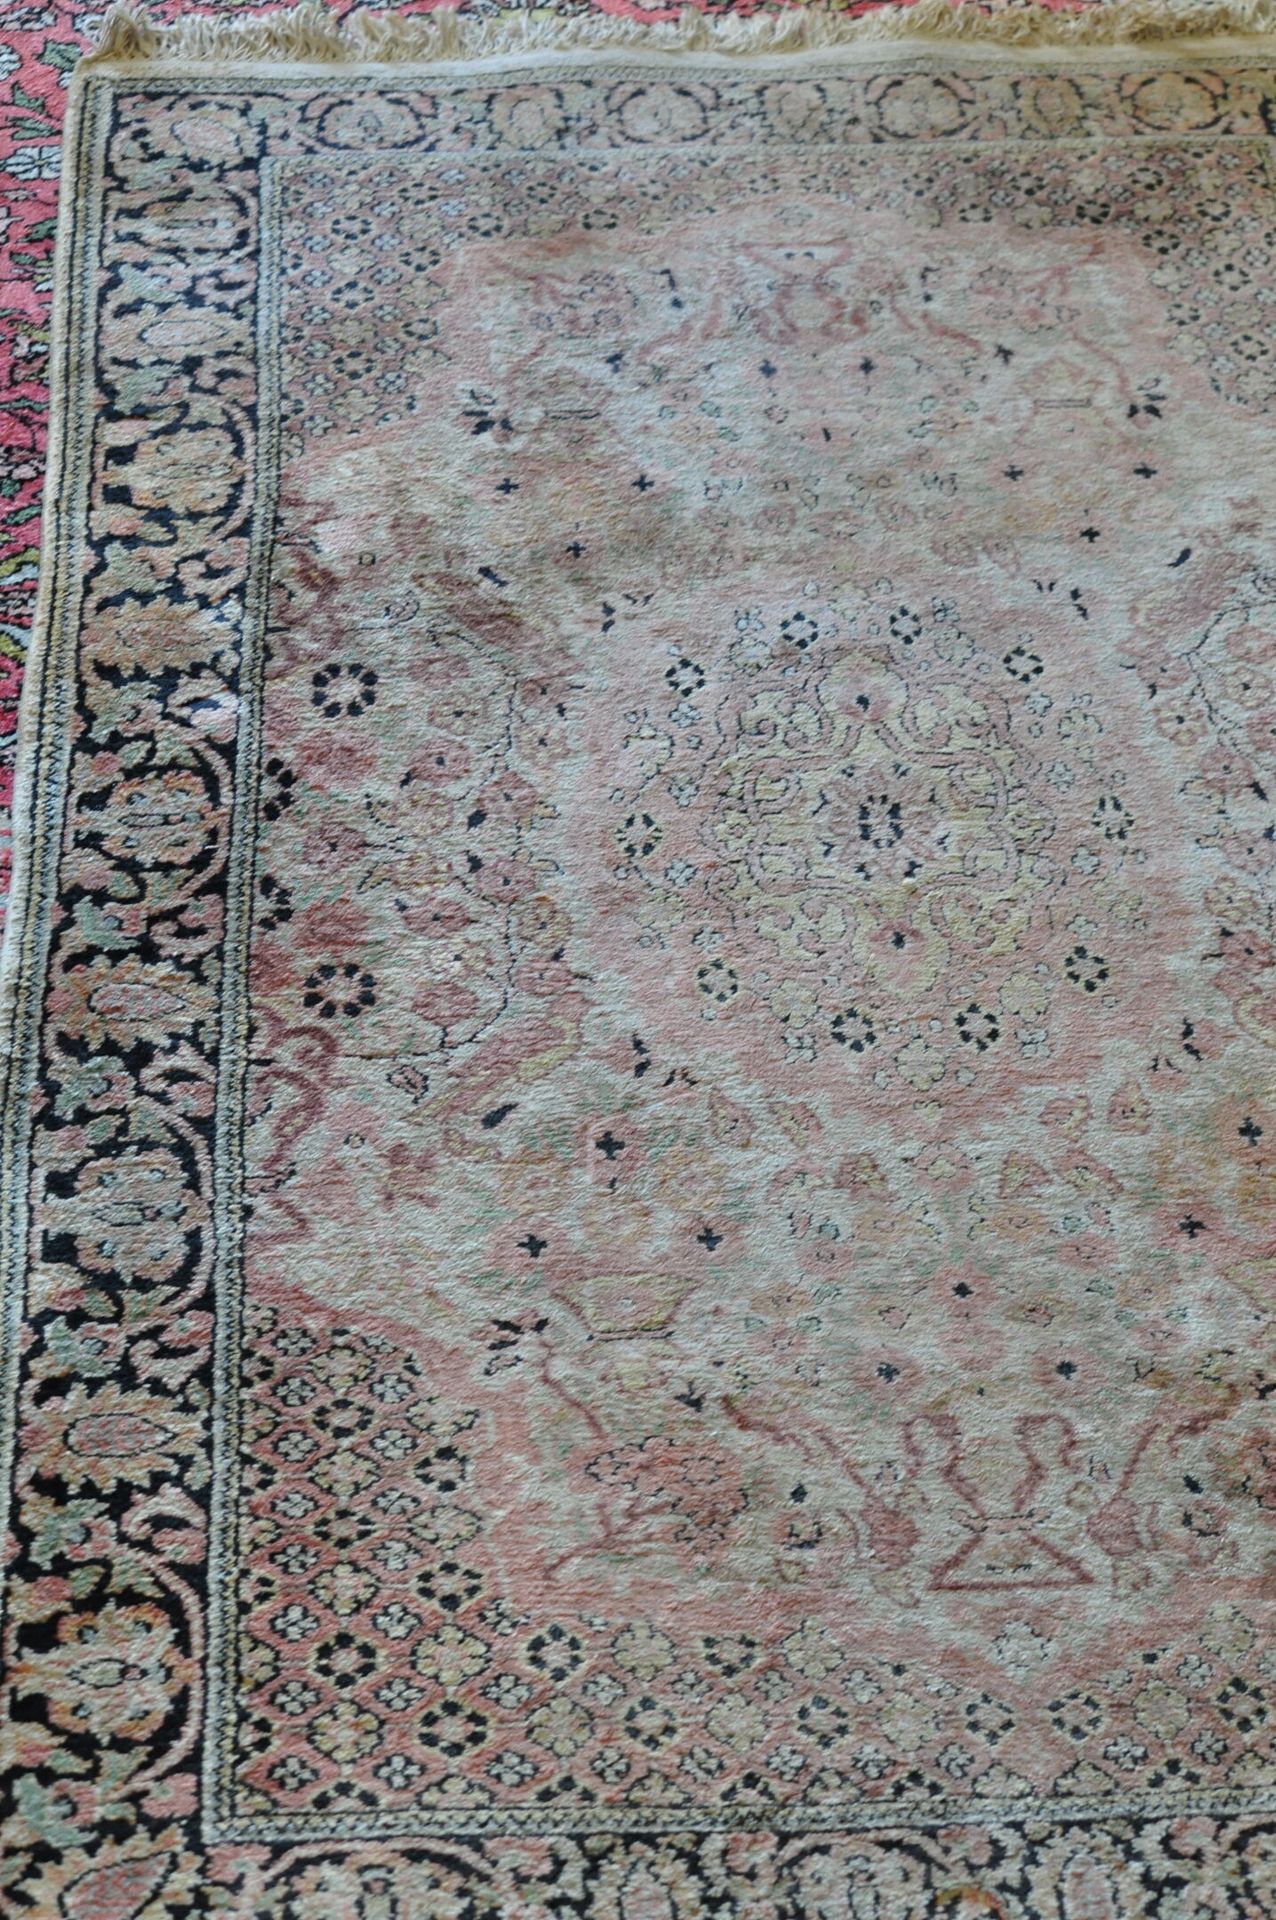 Null 羊毛地毯，有4个边框，在米色背景上装饰有植物。(穿着)

125 x 85 cm



2021年6月23日在巴黎第十六届会议上，只有通过预约才能领取&hellip;